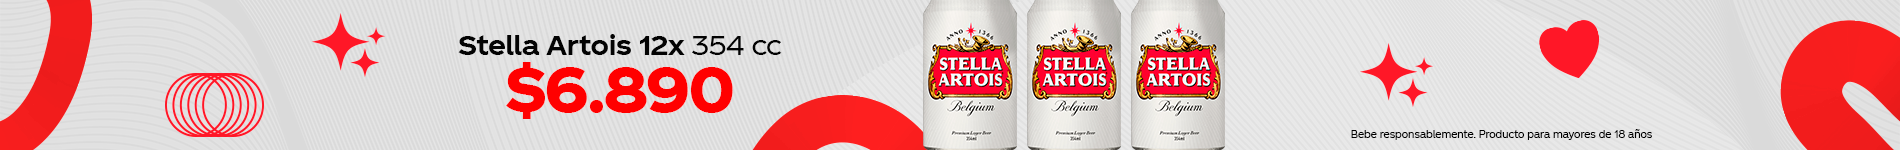 Cervezas Stella Artois